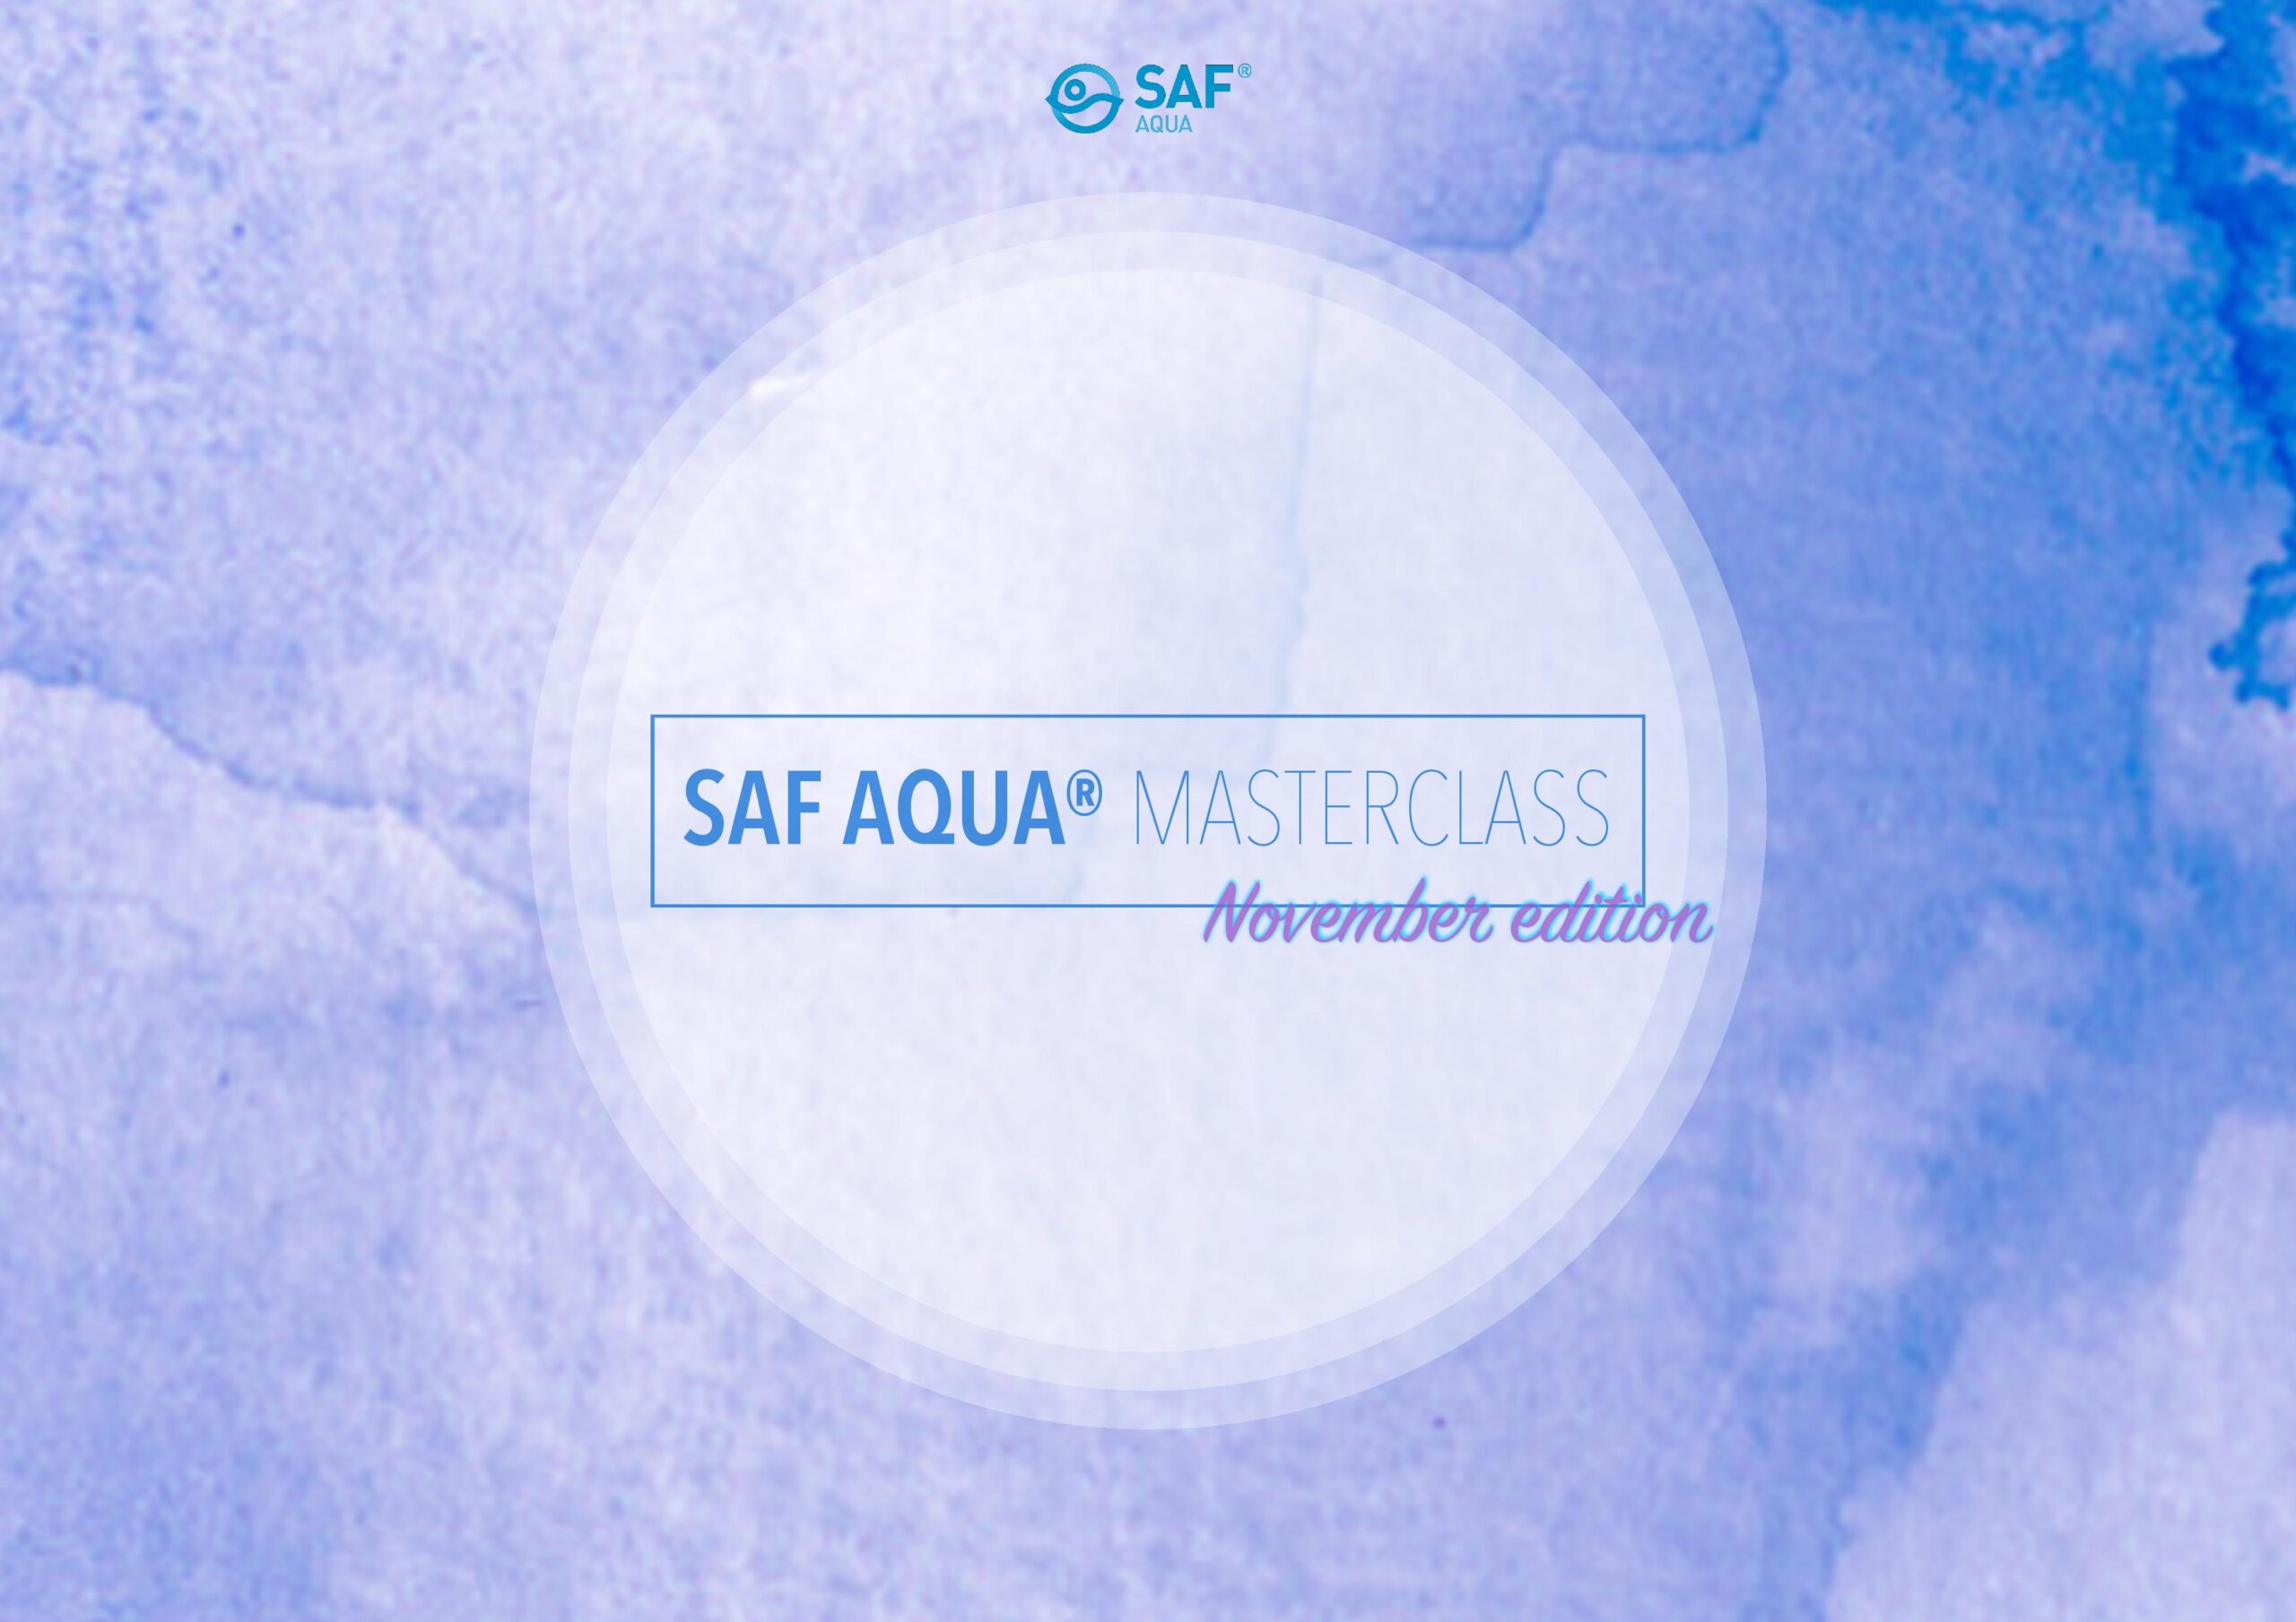 SAF AQUA® Masterclass - December edition